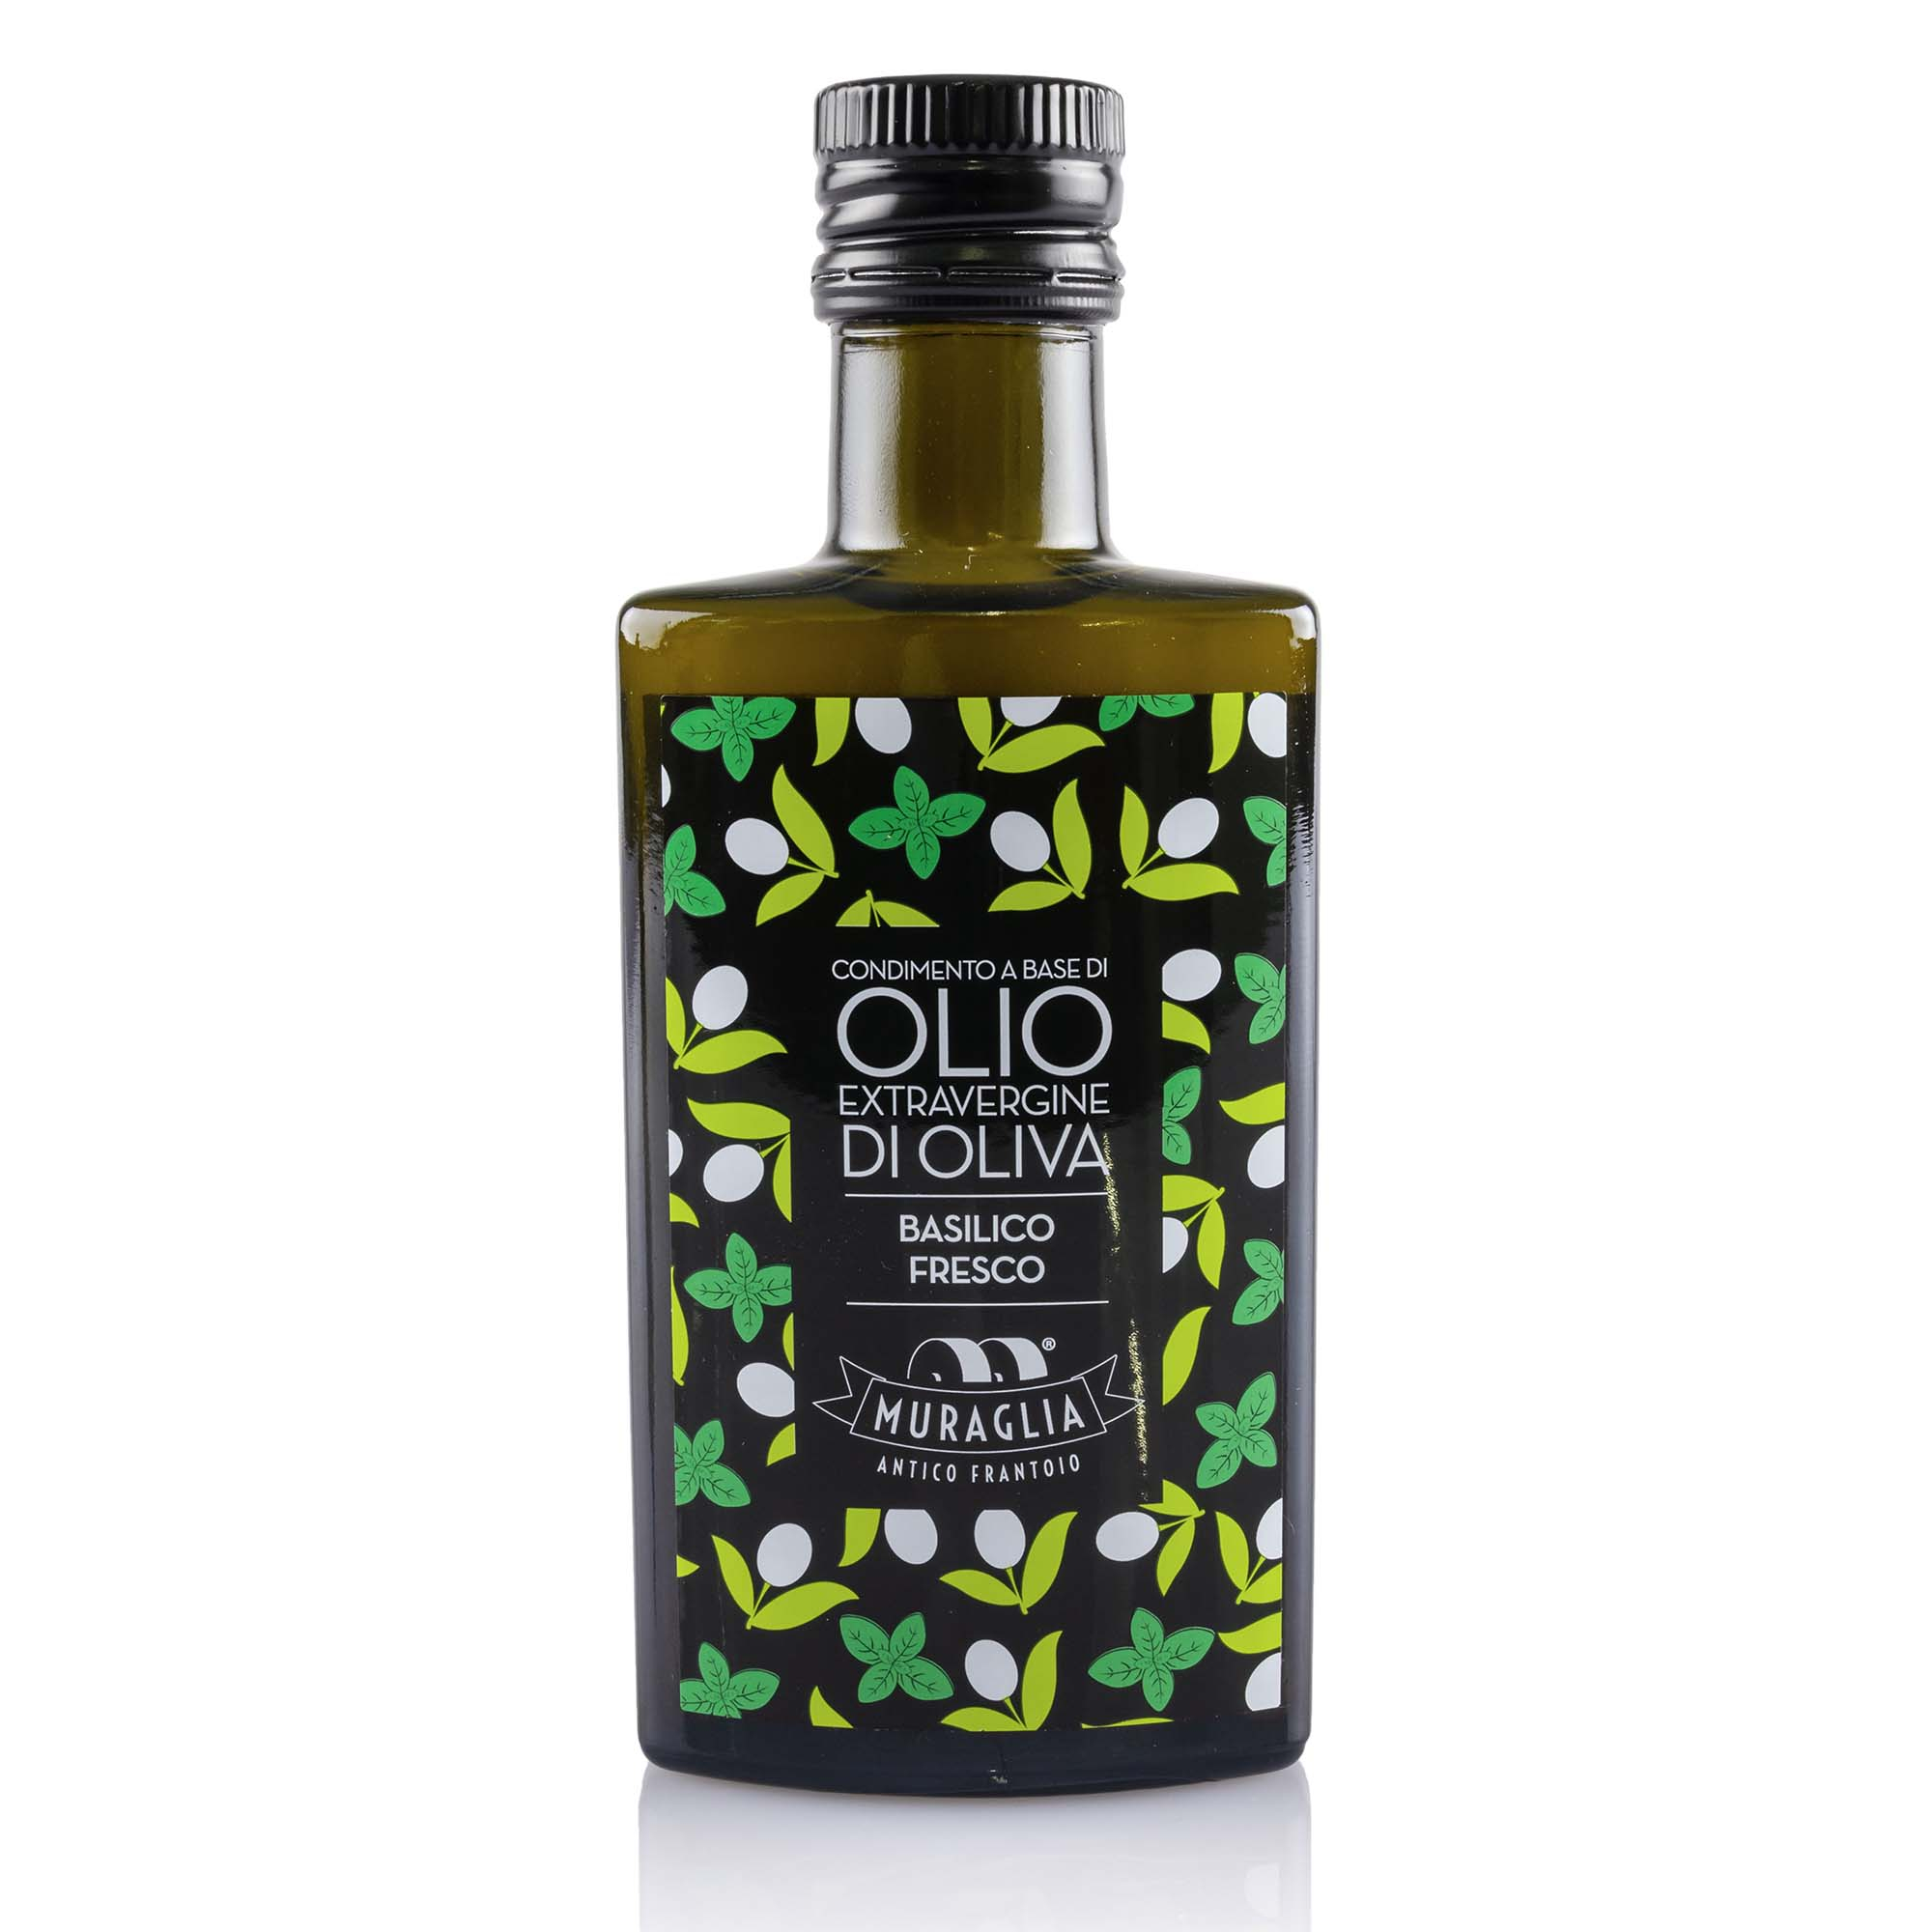 Olio extra vergine di o oliva, Muraglia, Basilico, 200ml